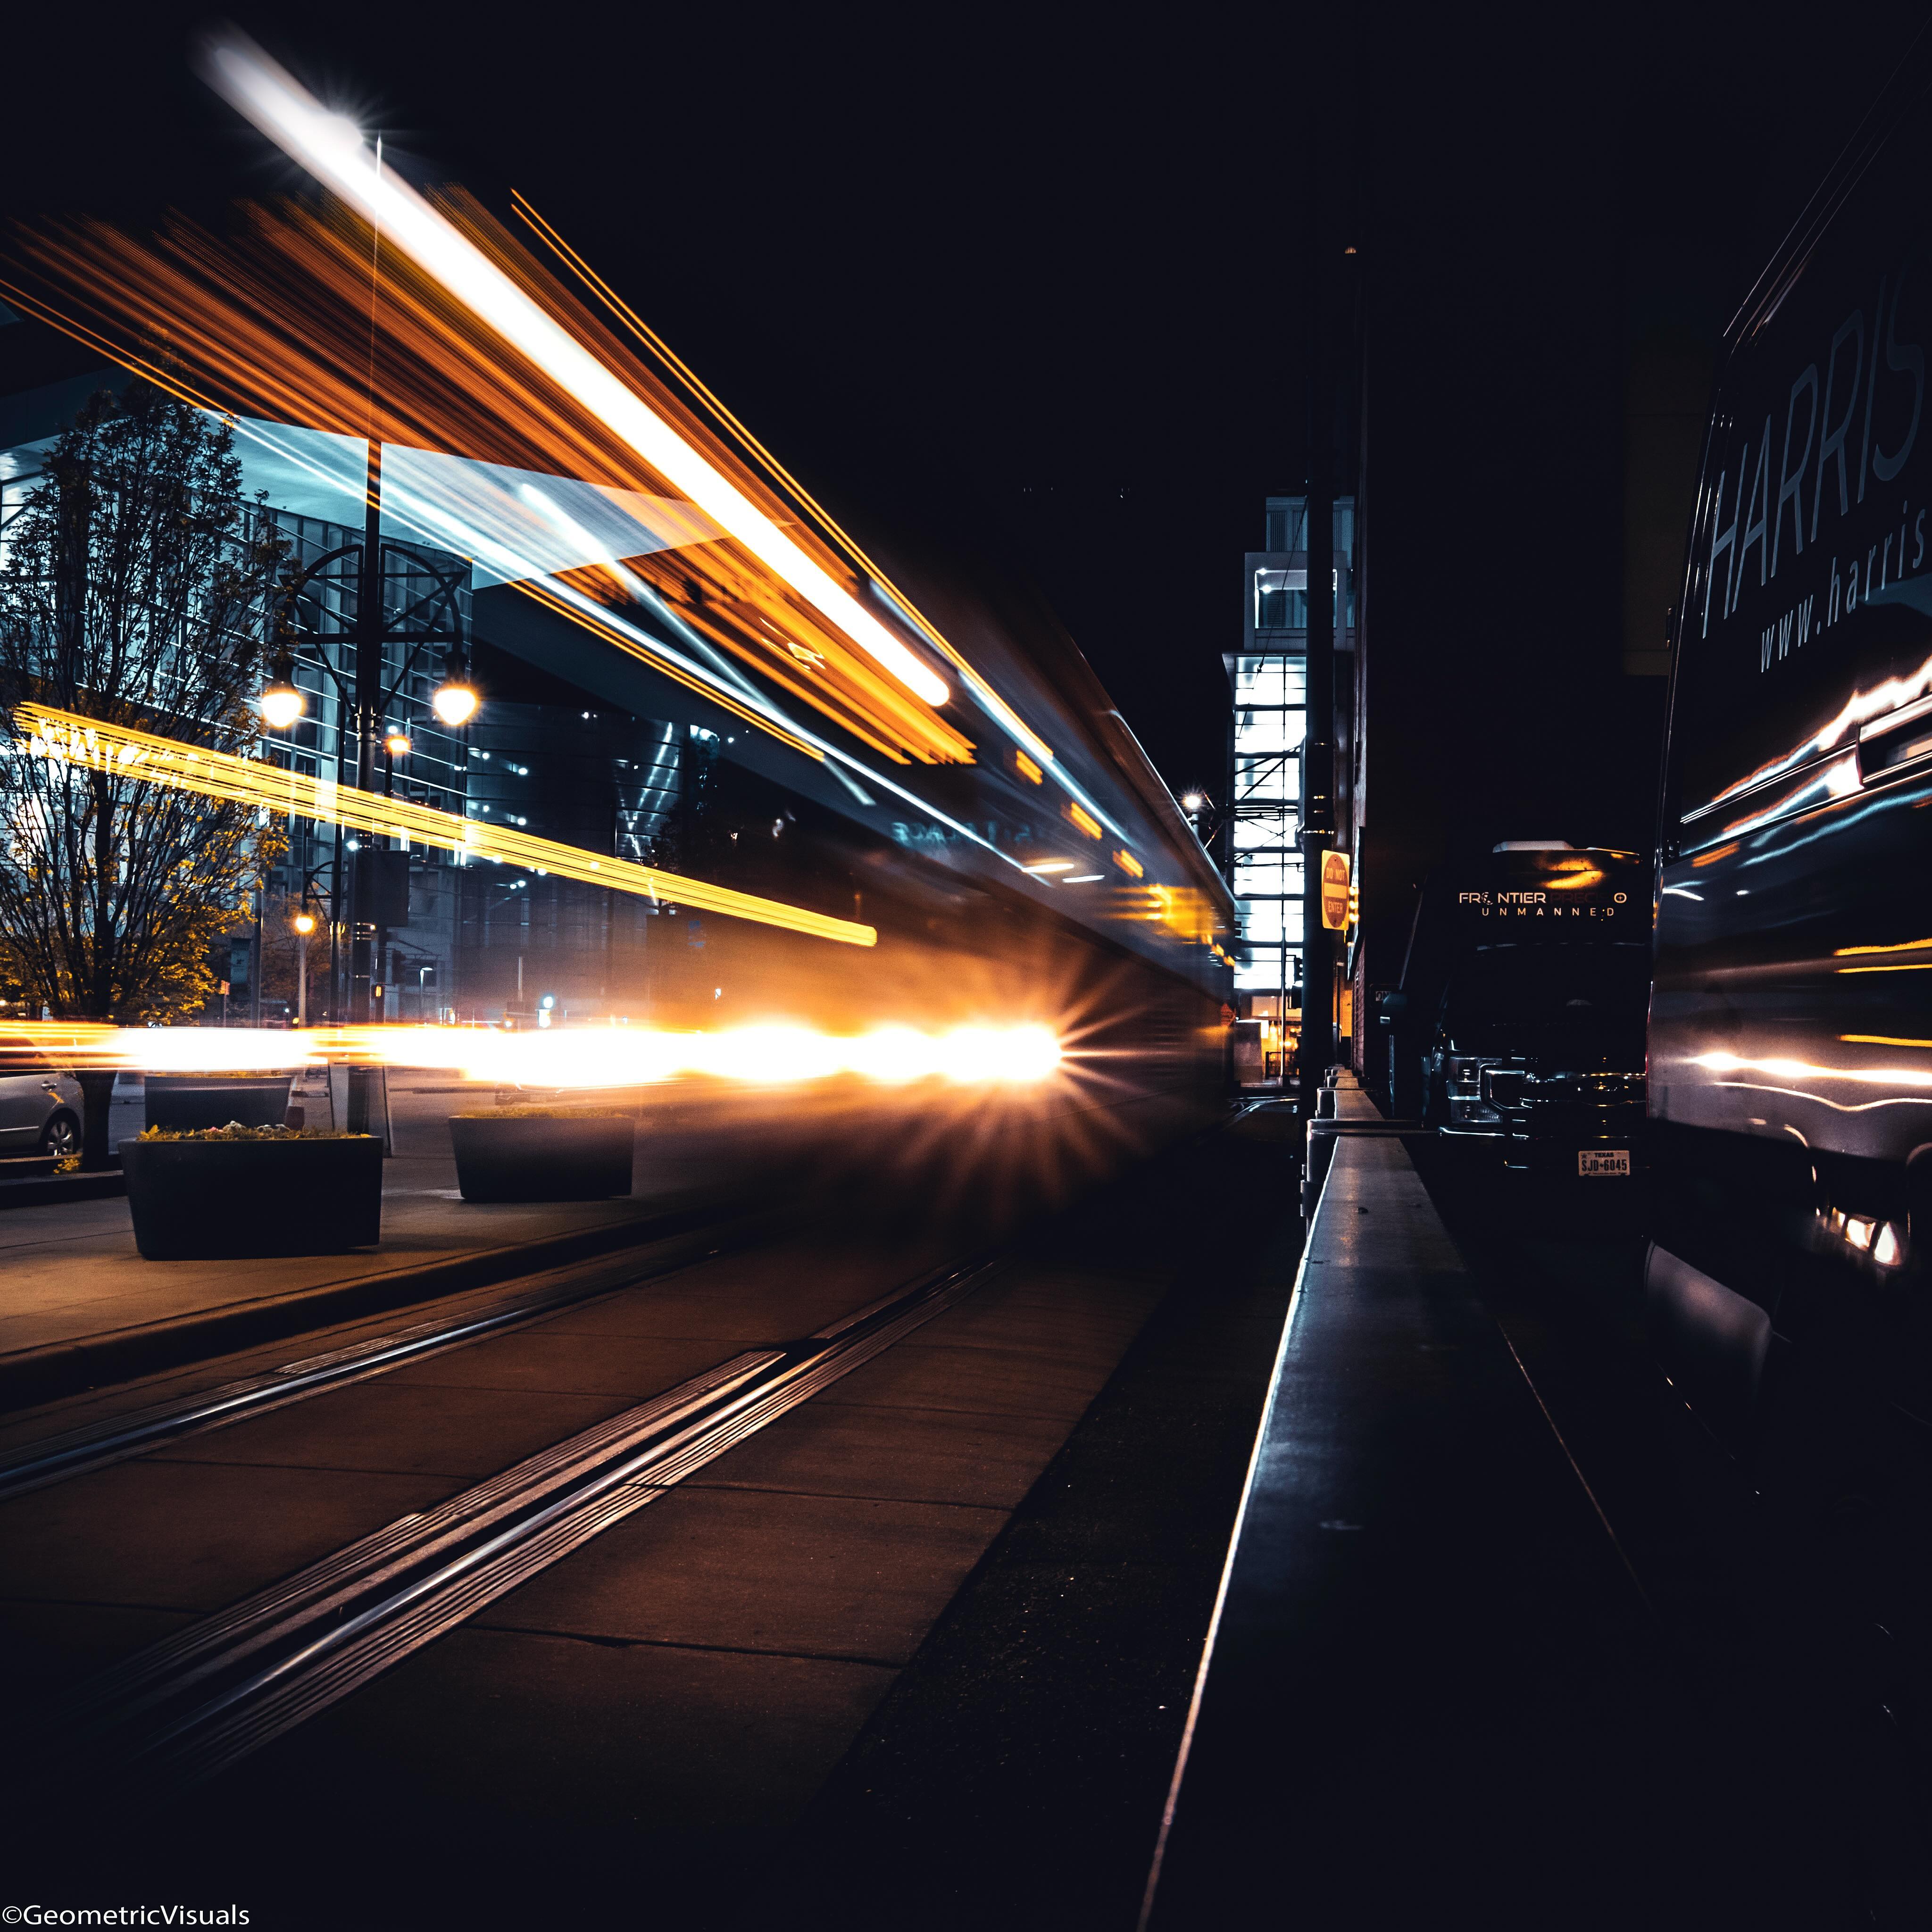 Split . . .

Long exposure passing train in Denver. 

ISO: 640 | F1.6 | 2.5”

•

#nightphotography #ig_nightphotography #longexposure #longexposure_shots #creative_ace #nightshots #lighttrail #lighttrails #urbanromantix #night_owlz #nightshooters #co10k #tones_addiction #raw_nightshots #cinema_streets #toneception #rsa_streetview #moody_shotz_ #denver_afterdark #depthobsessed #dof_brilliance #dof_addicts #nightcrafters_art #streetgrammers #longexpo #subshooterz #bokeh_addicts #bokeh_obsessed